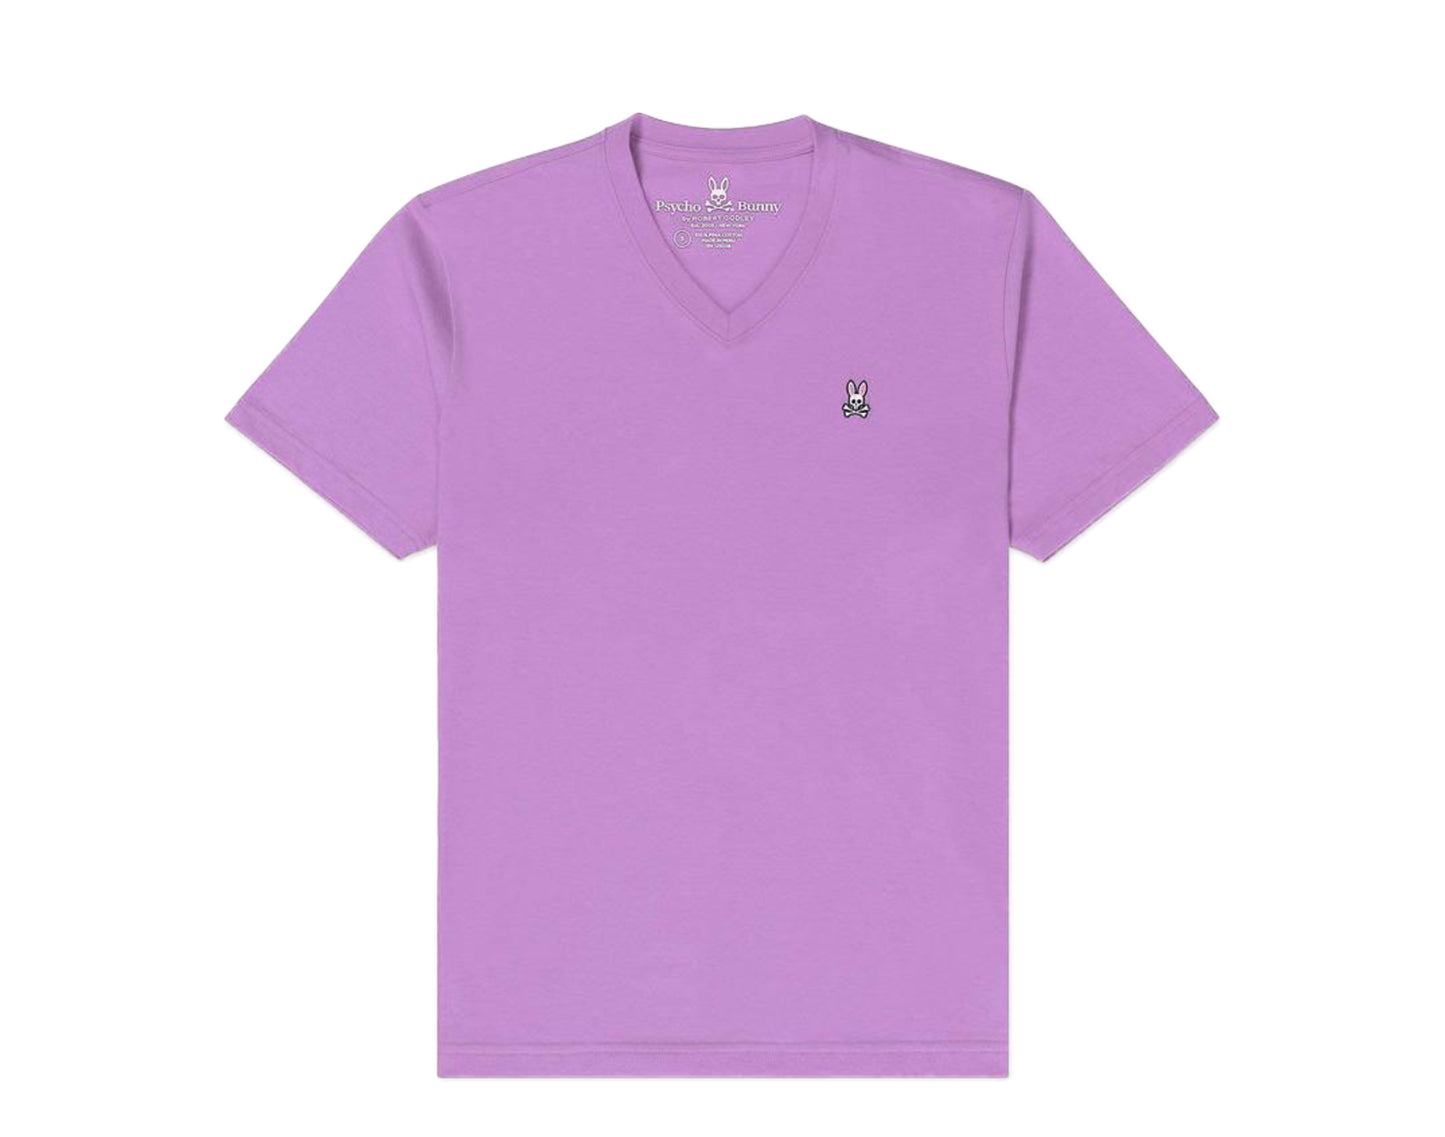 Psycho Bunny Classic V-Neck Helio Purple Men's Tee Shirt B6U100J1PC-LIO